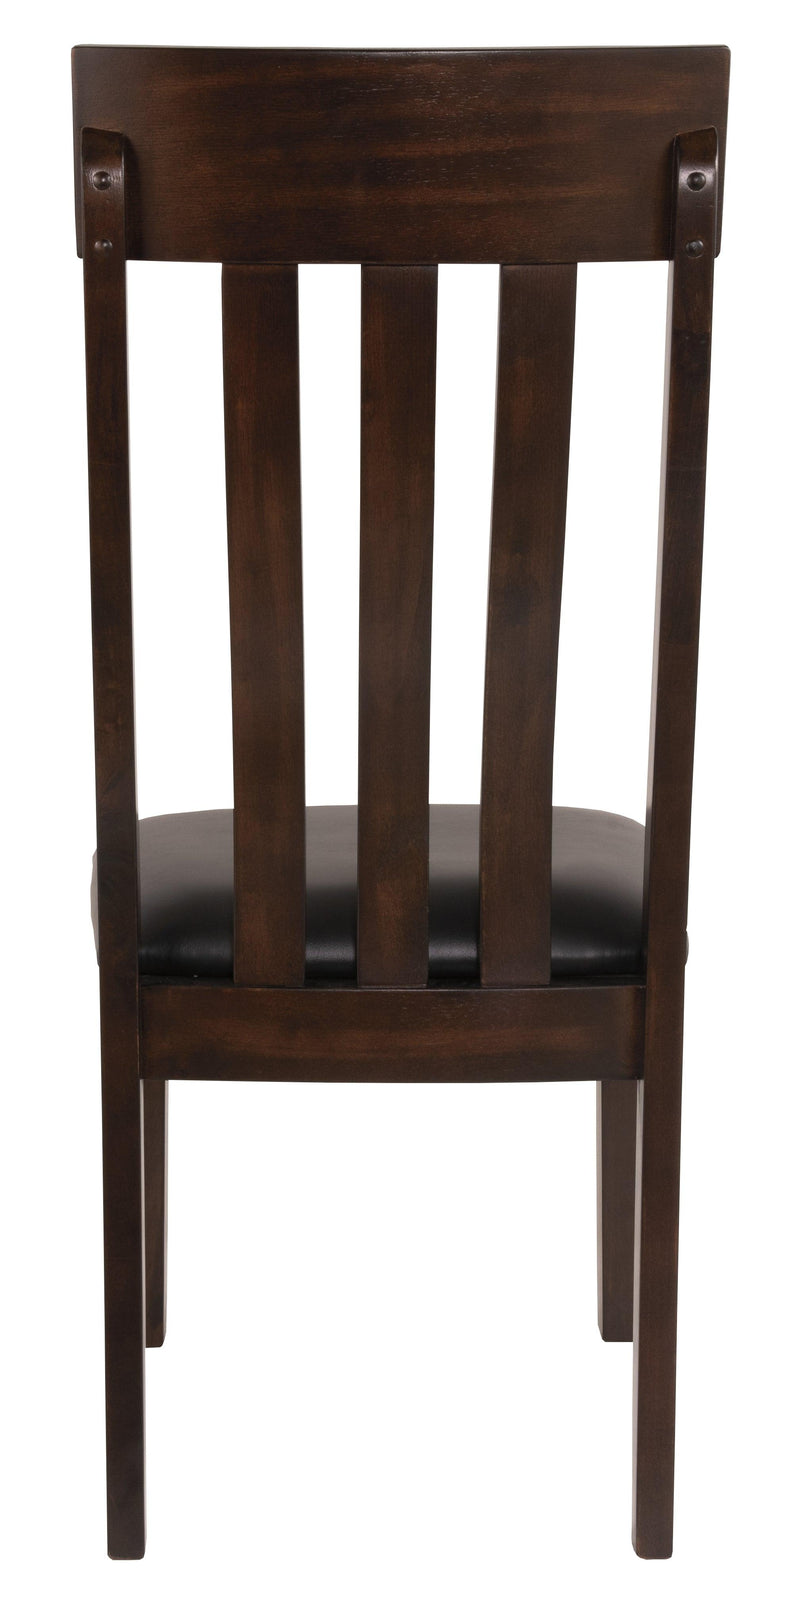 Haddigan Dark Brown Dining Chair - Ella Furniture